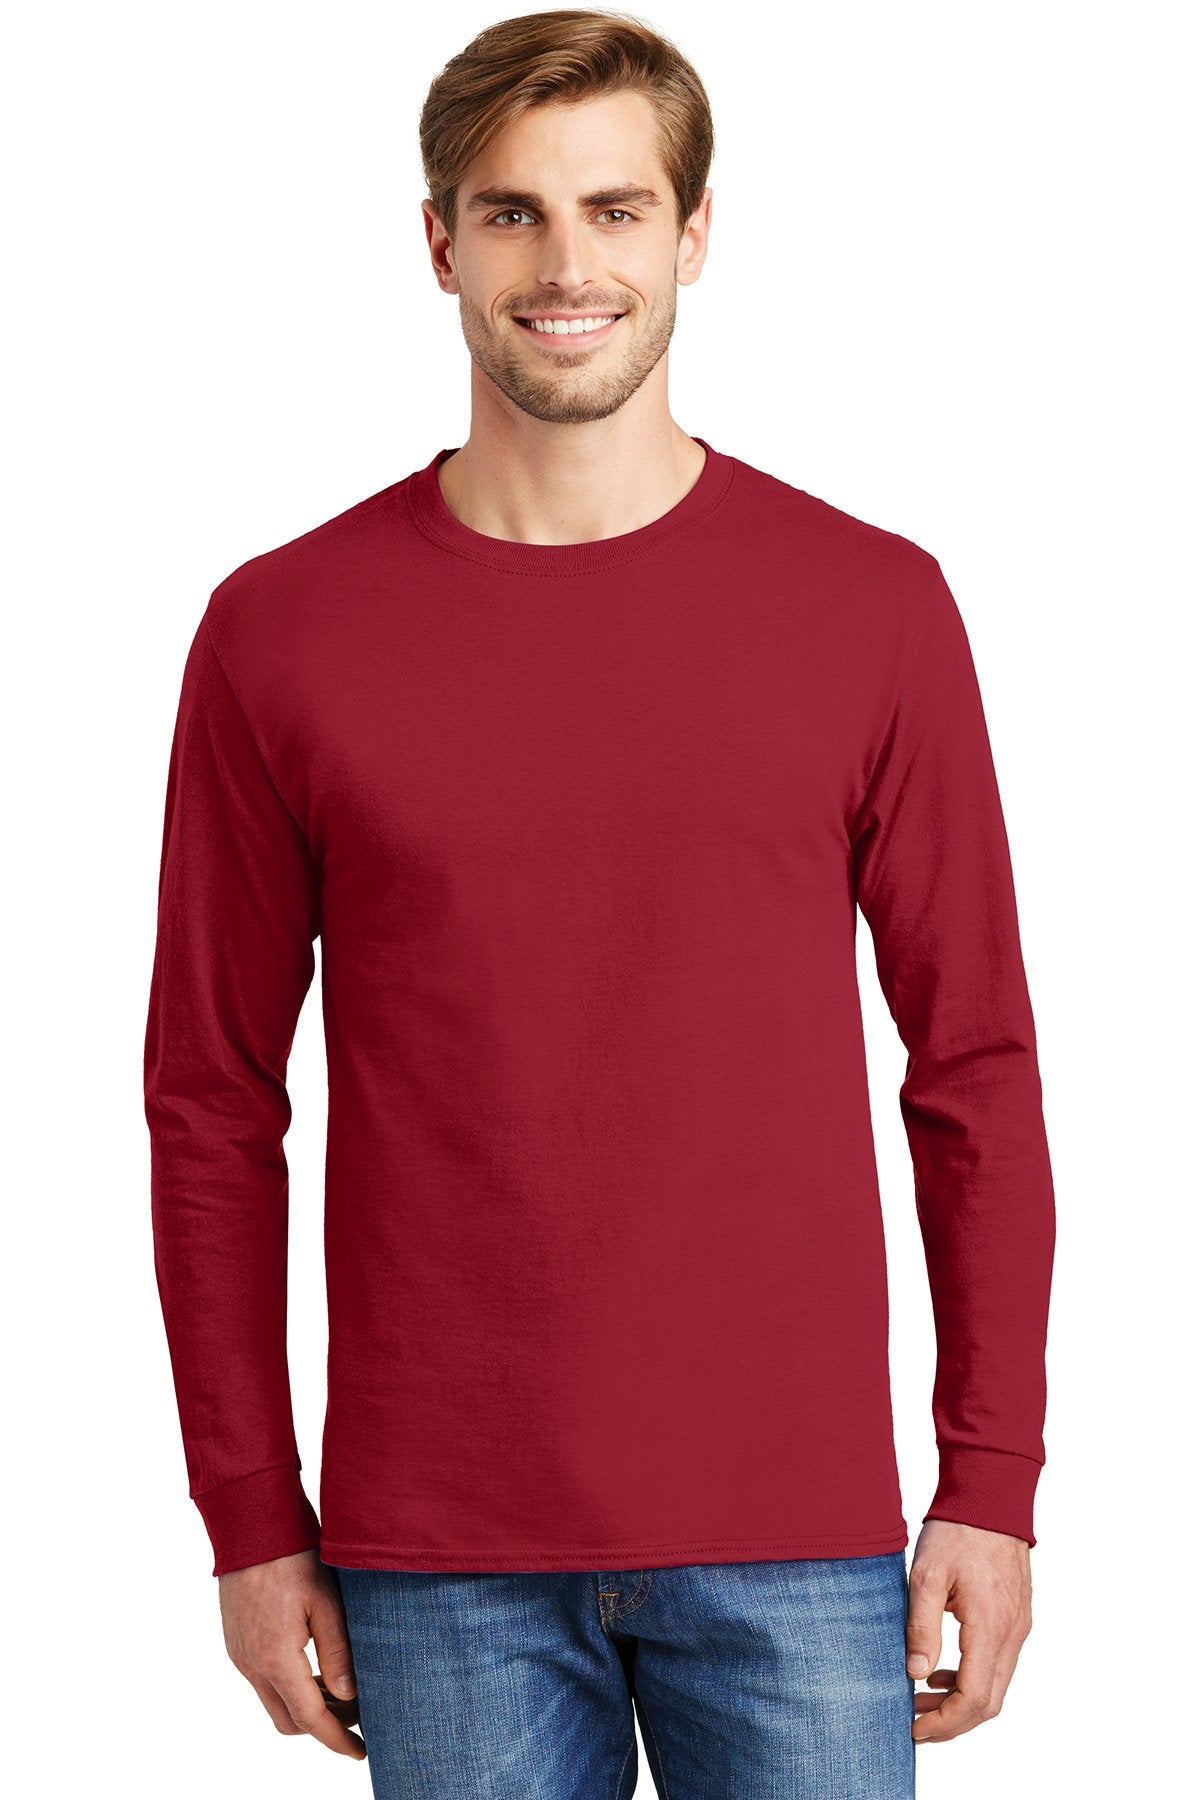 Hanes Tagless Cotton Long Sleeve T Shirt in Deep Red, add a custom design